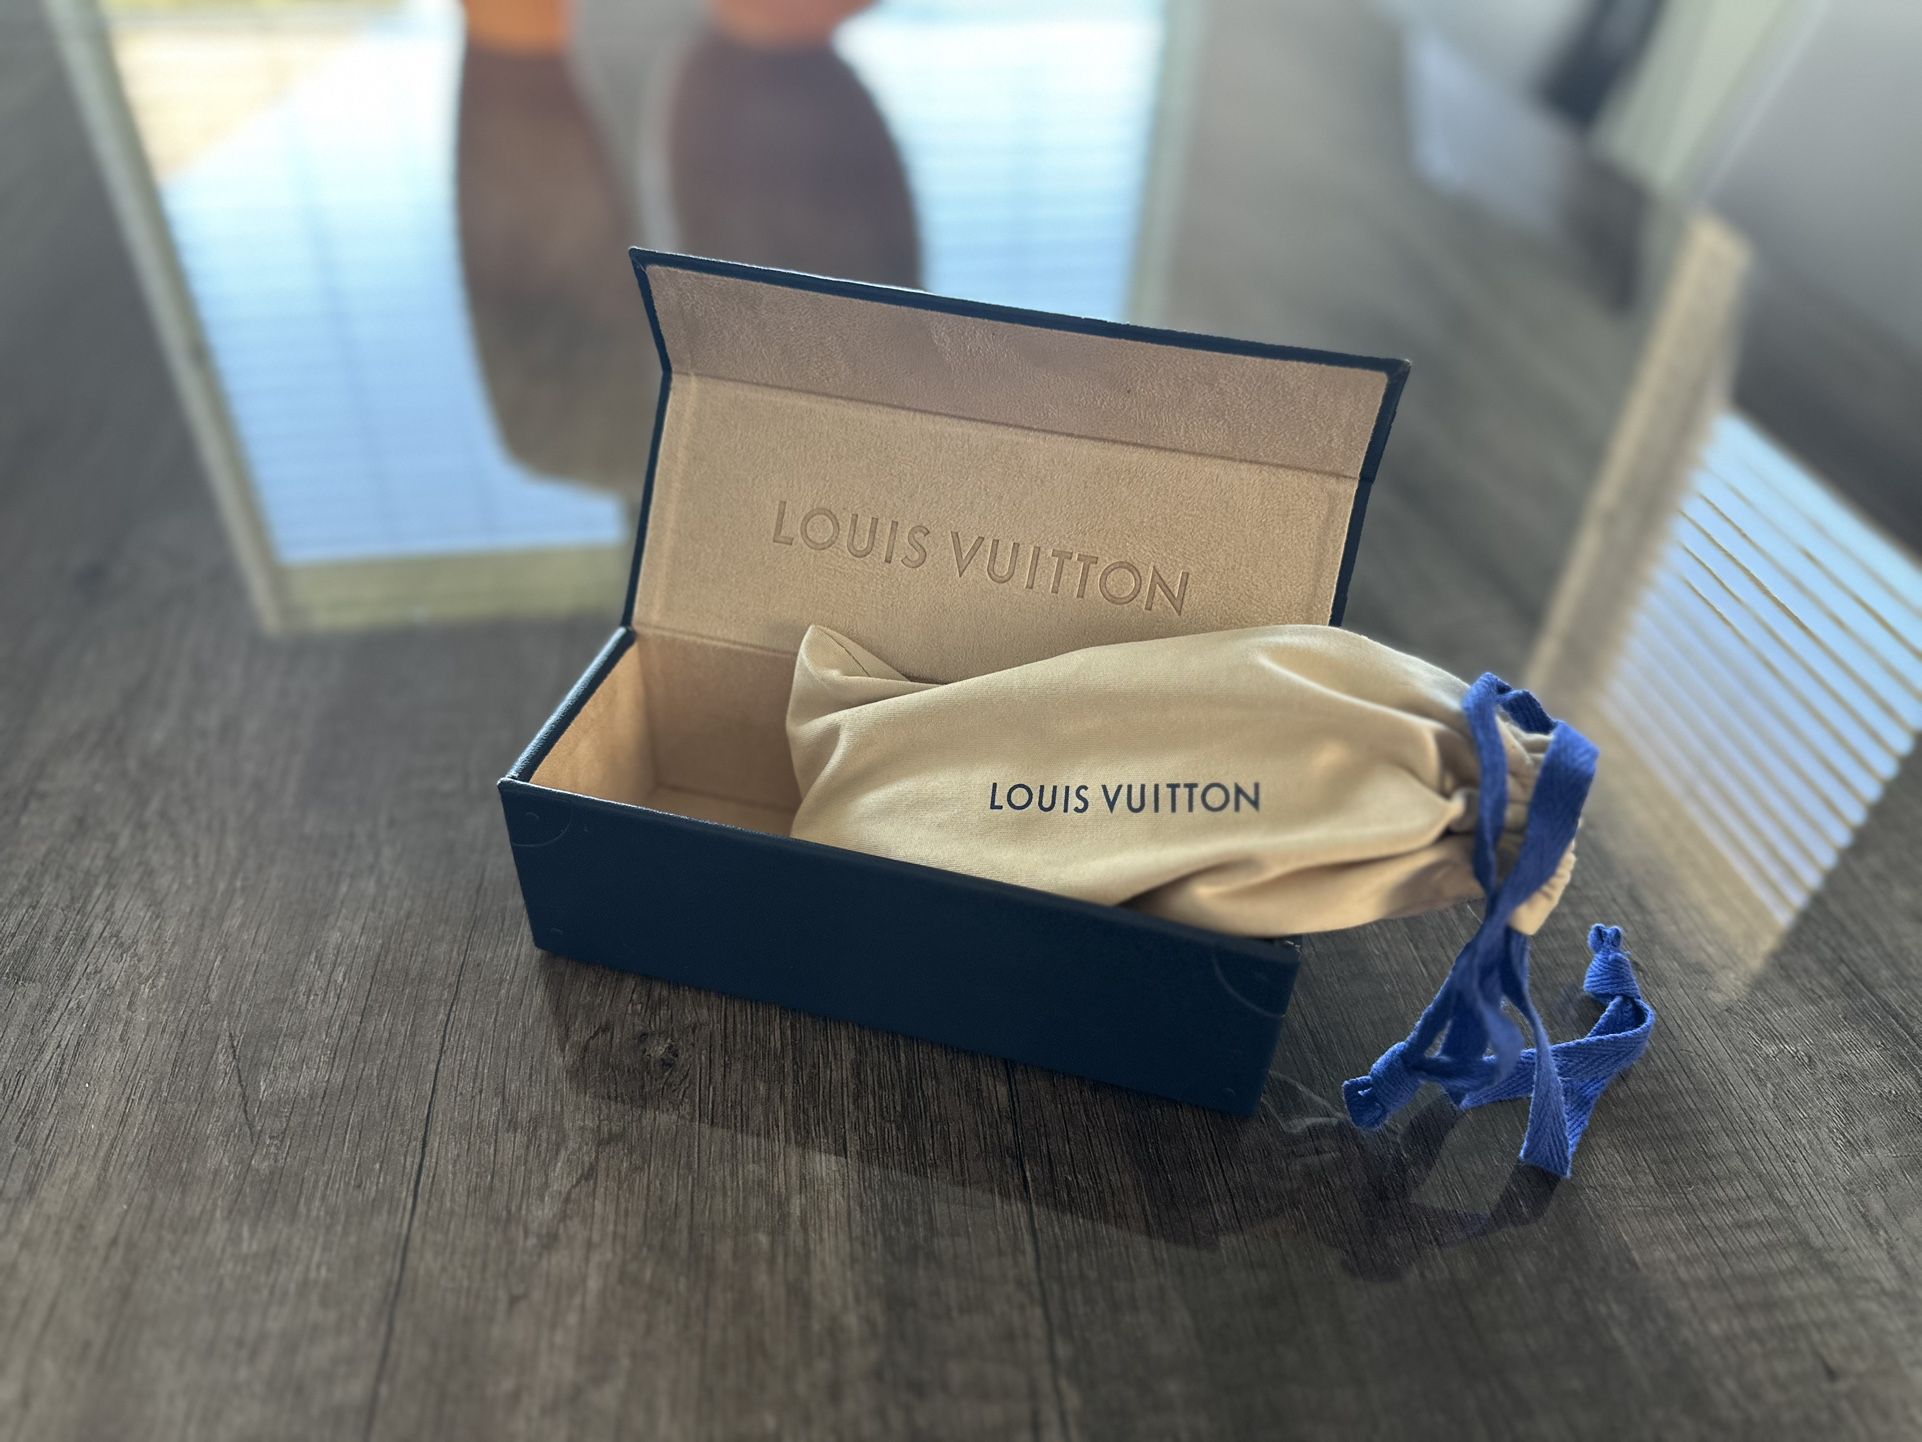 Louis Vuitton LV Clockwise Sunglasses for Sale in New Orleans, LA